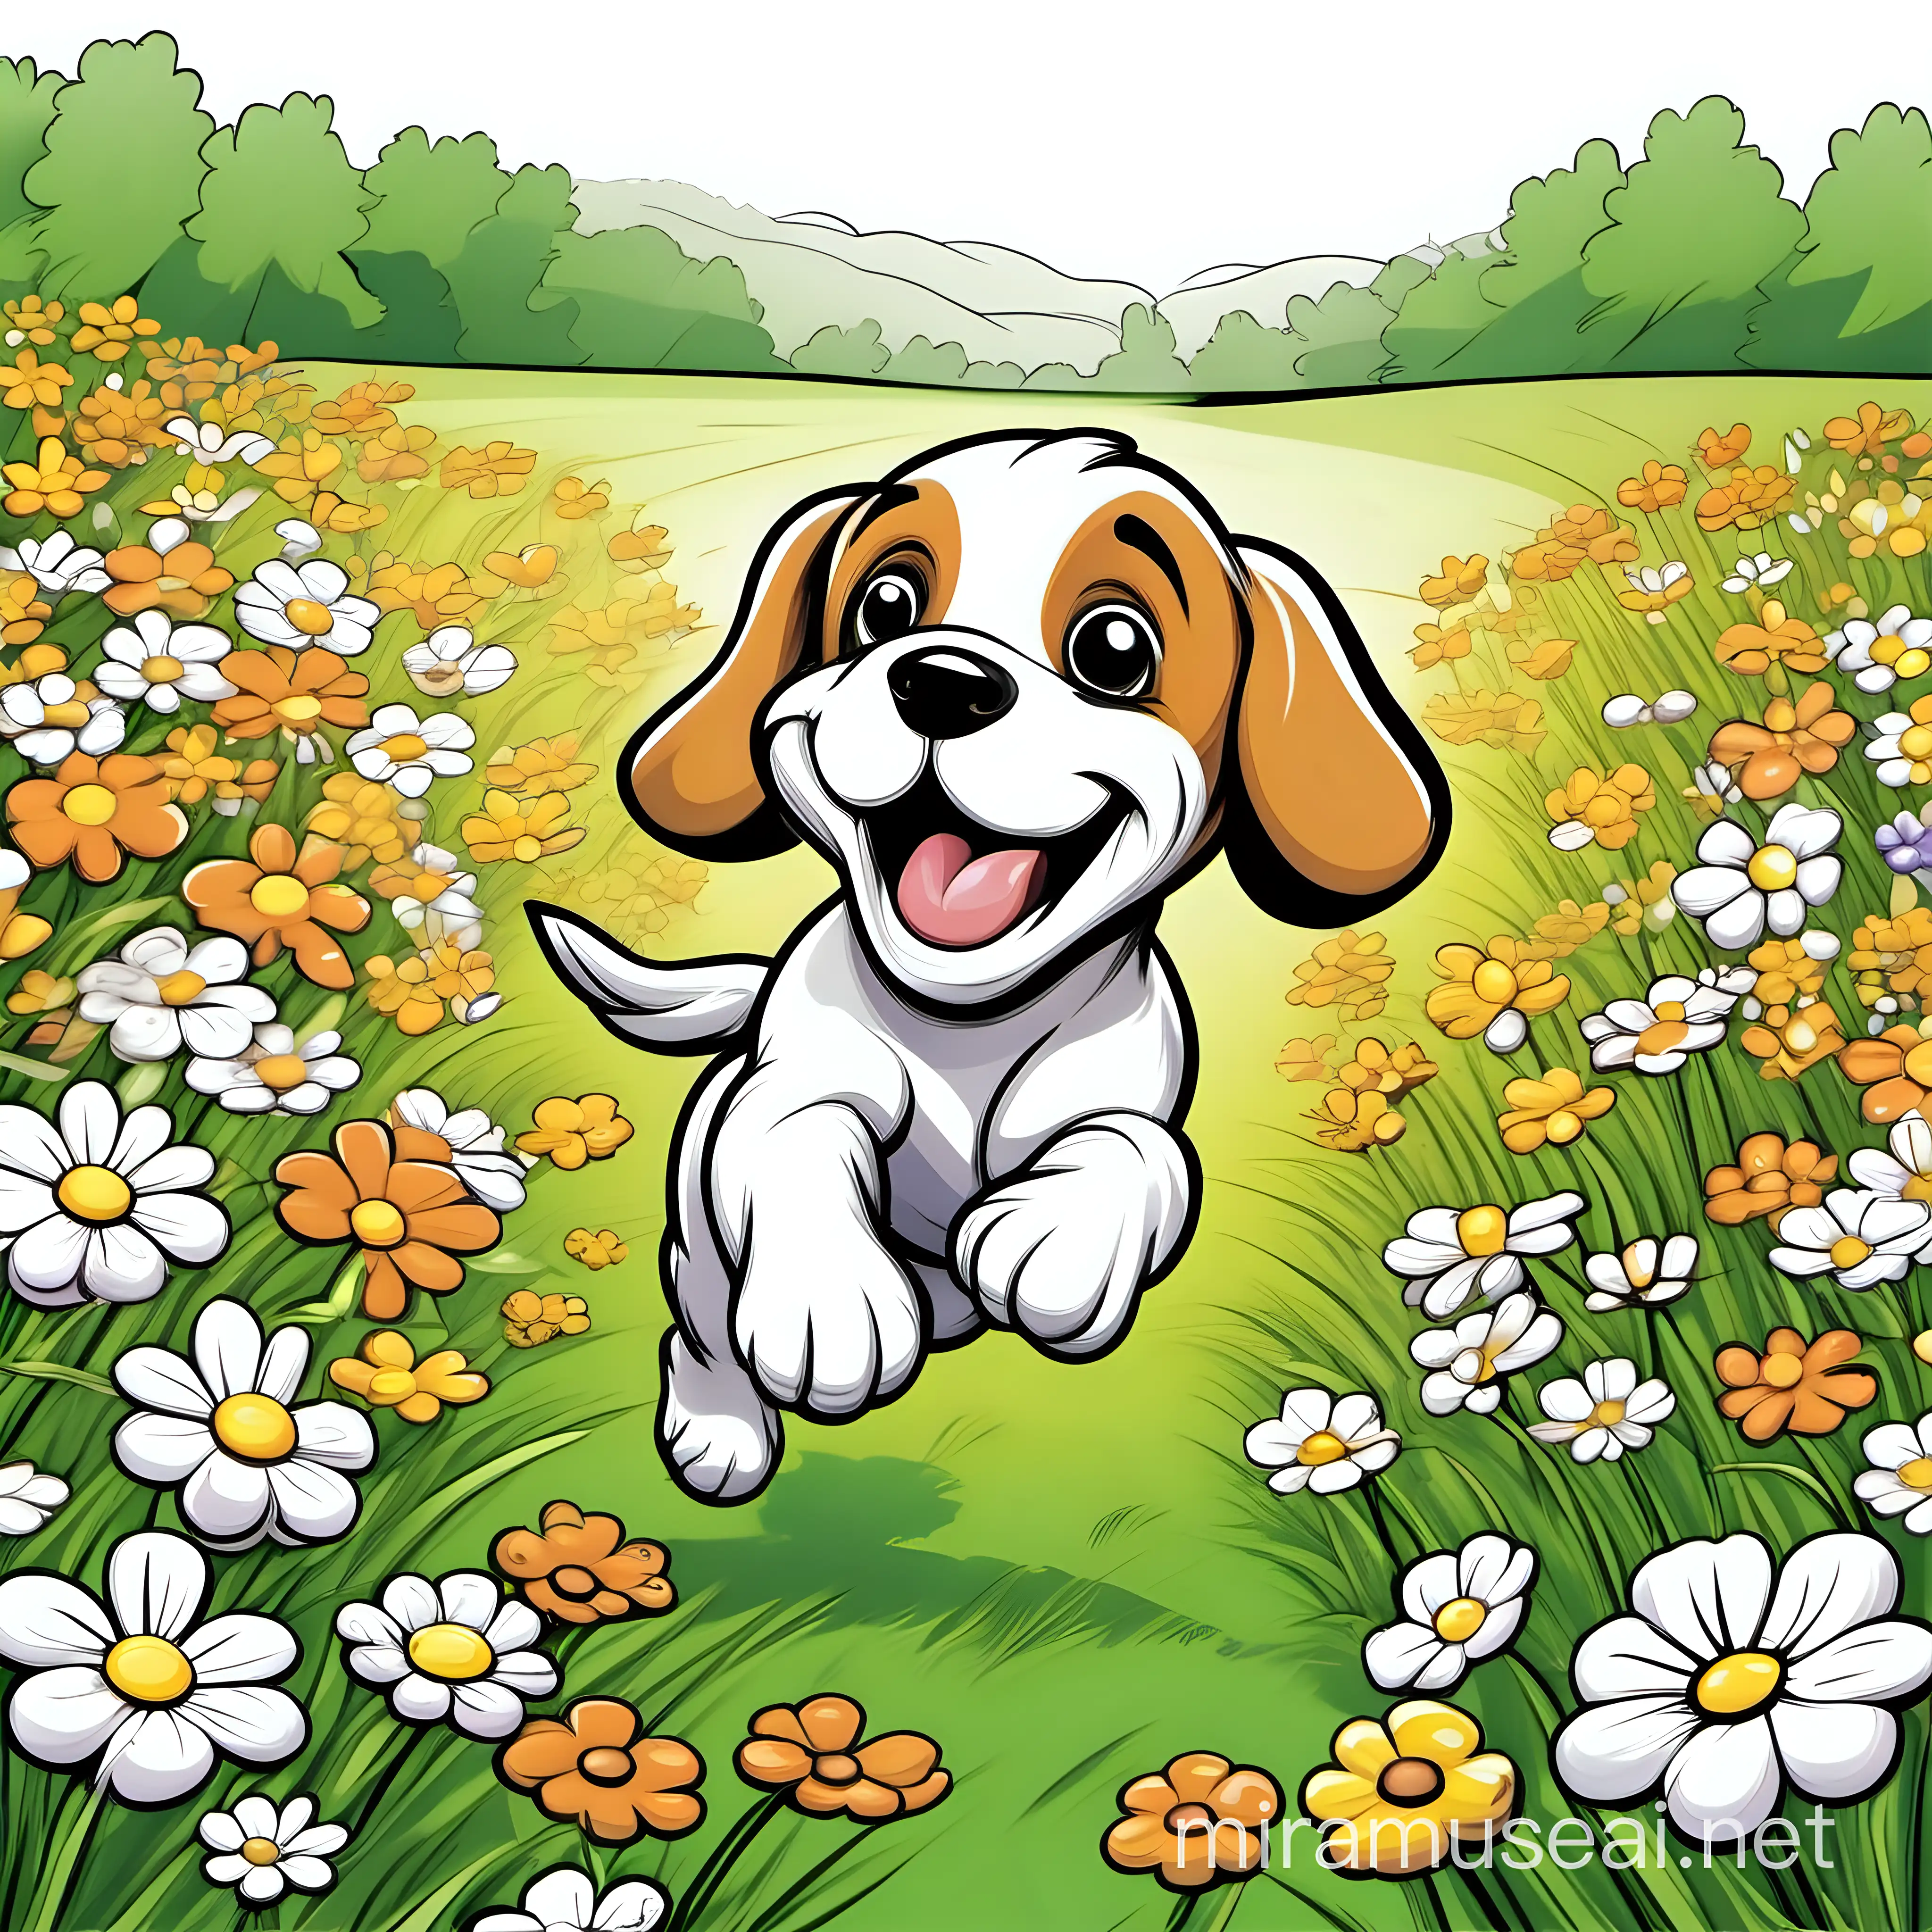 Joyful Cartoon Puppy Frolicking in a Meadow of Colorful Flowers